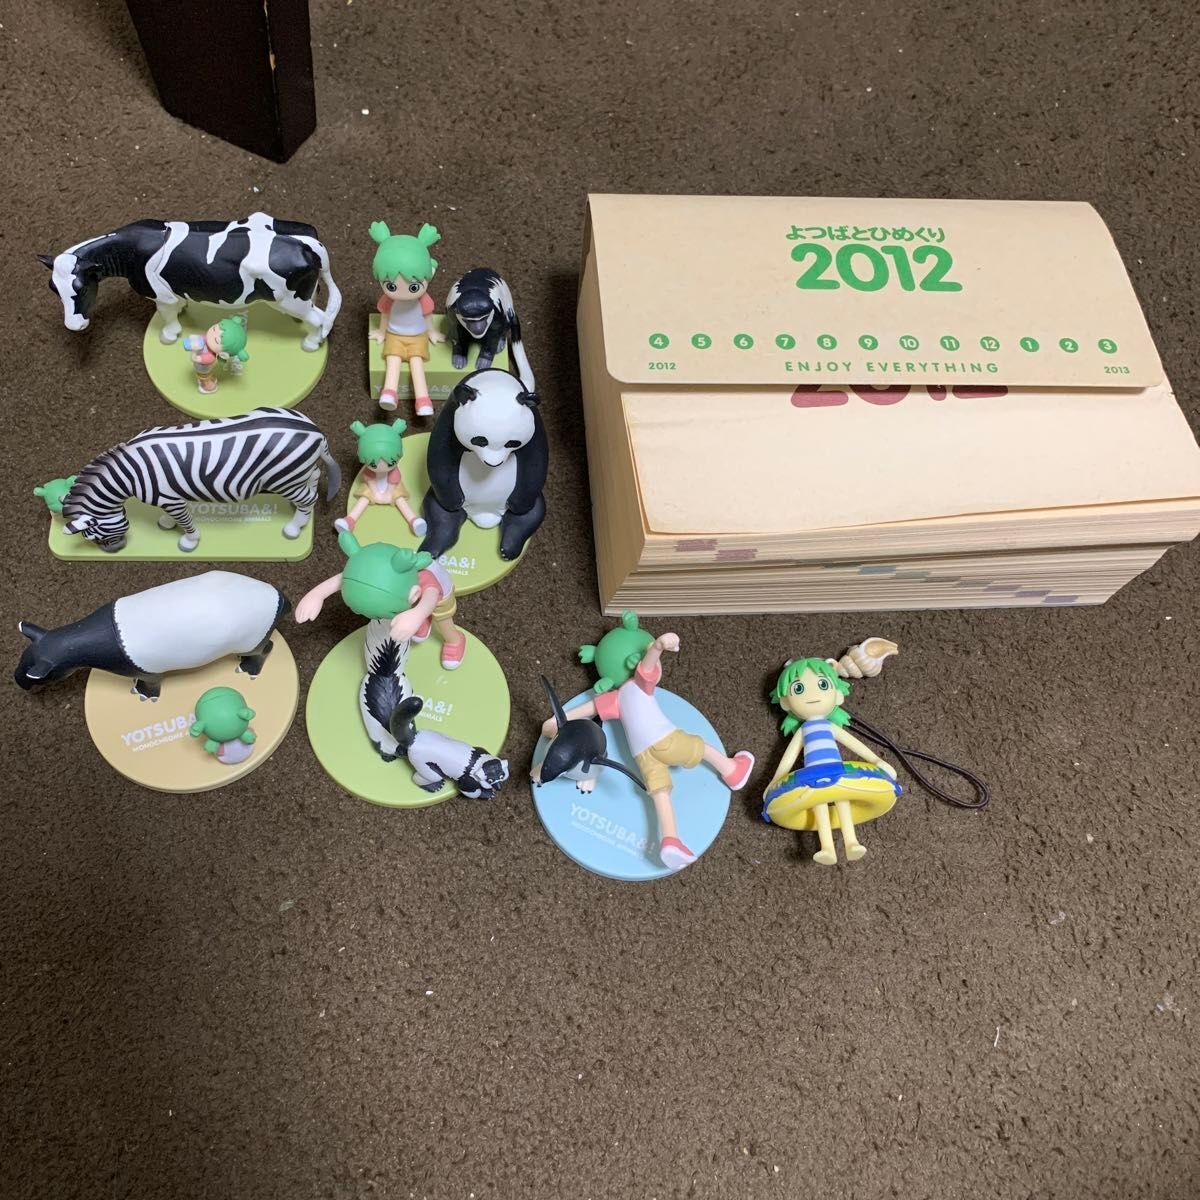 Yotsuba& Kaiyodo Capsule Q Figure Lot Calendar 2012 Keychain Mascot Animals